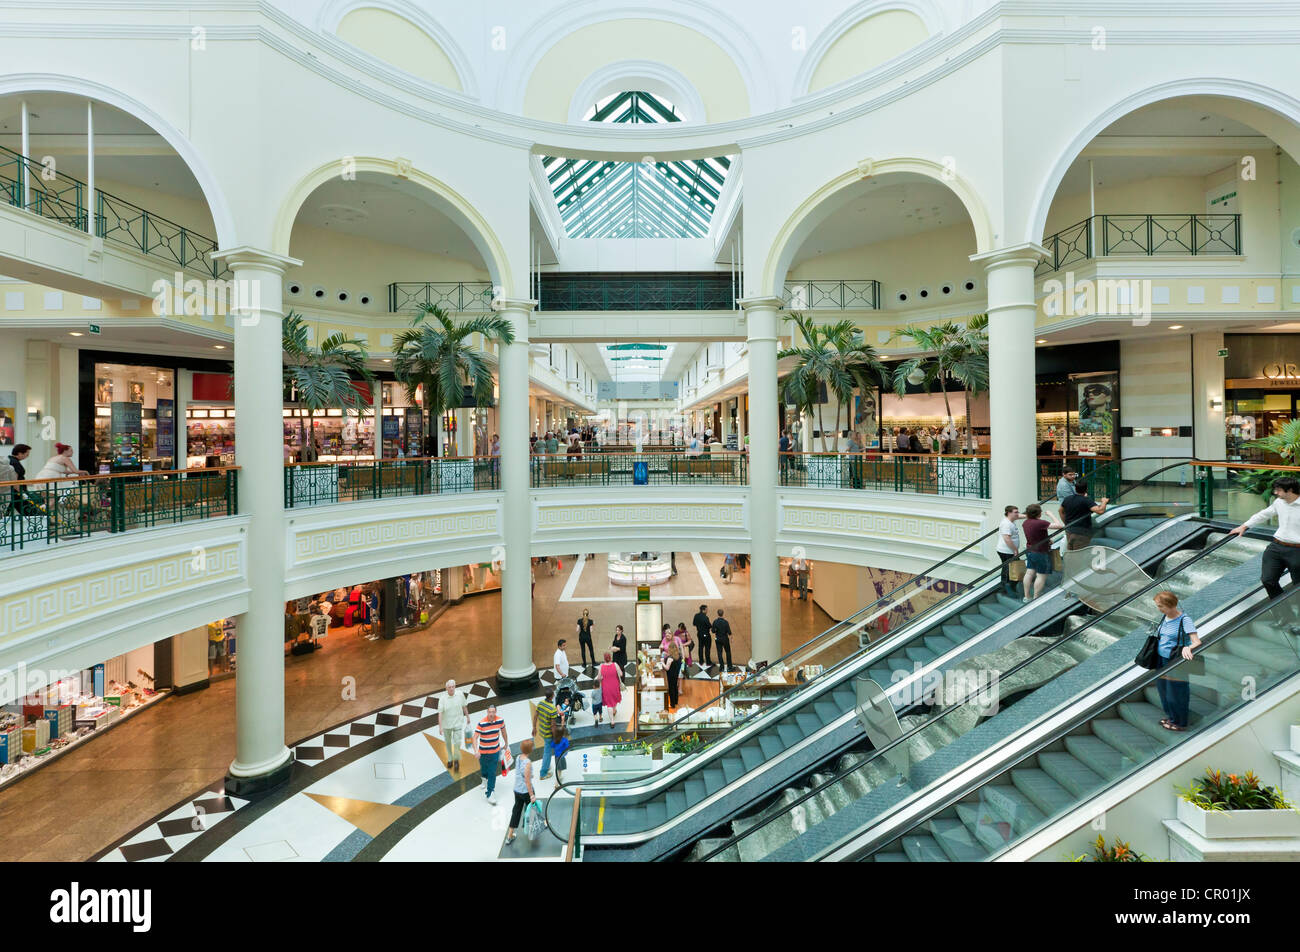 Meadowhall Einkaufszentrum Mall Sheffield Yorkshire England uk gb Eu Südeuropa Stockfoto